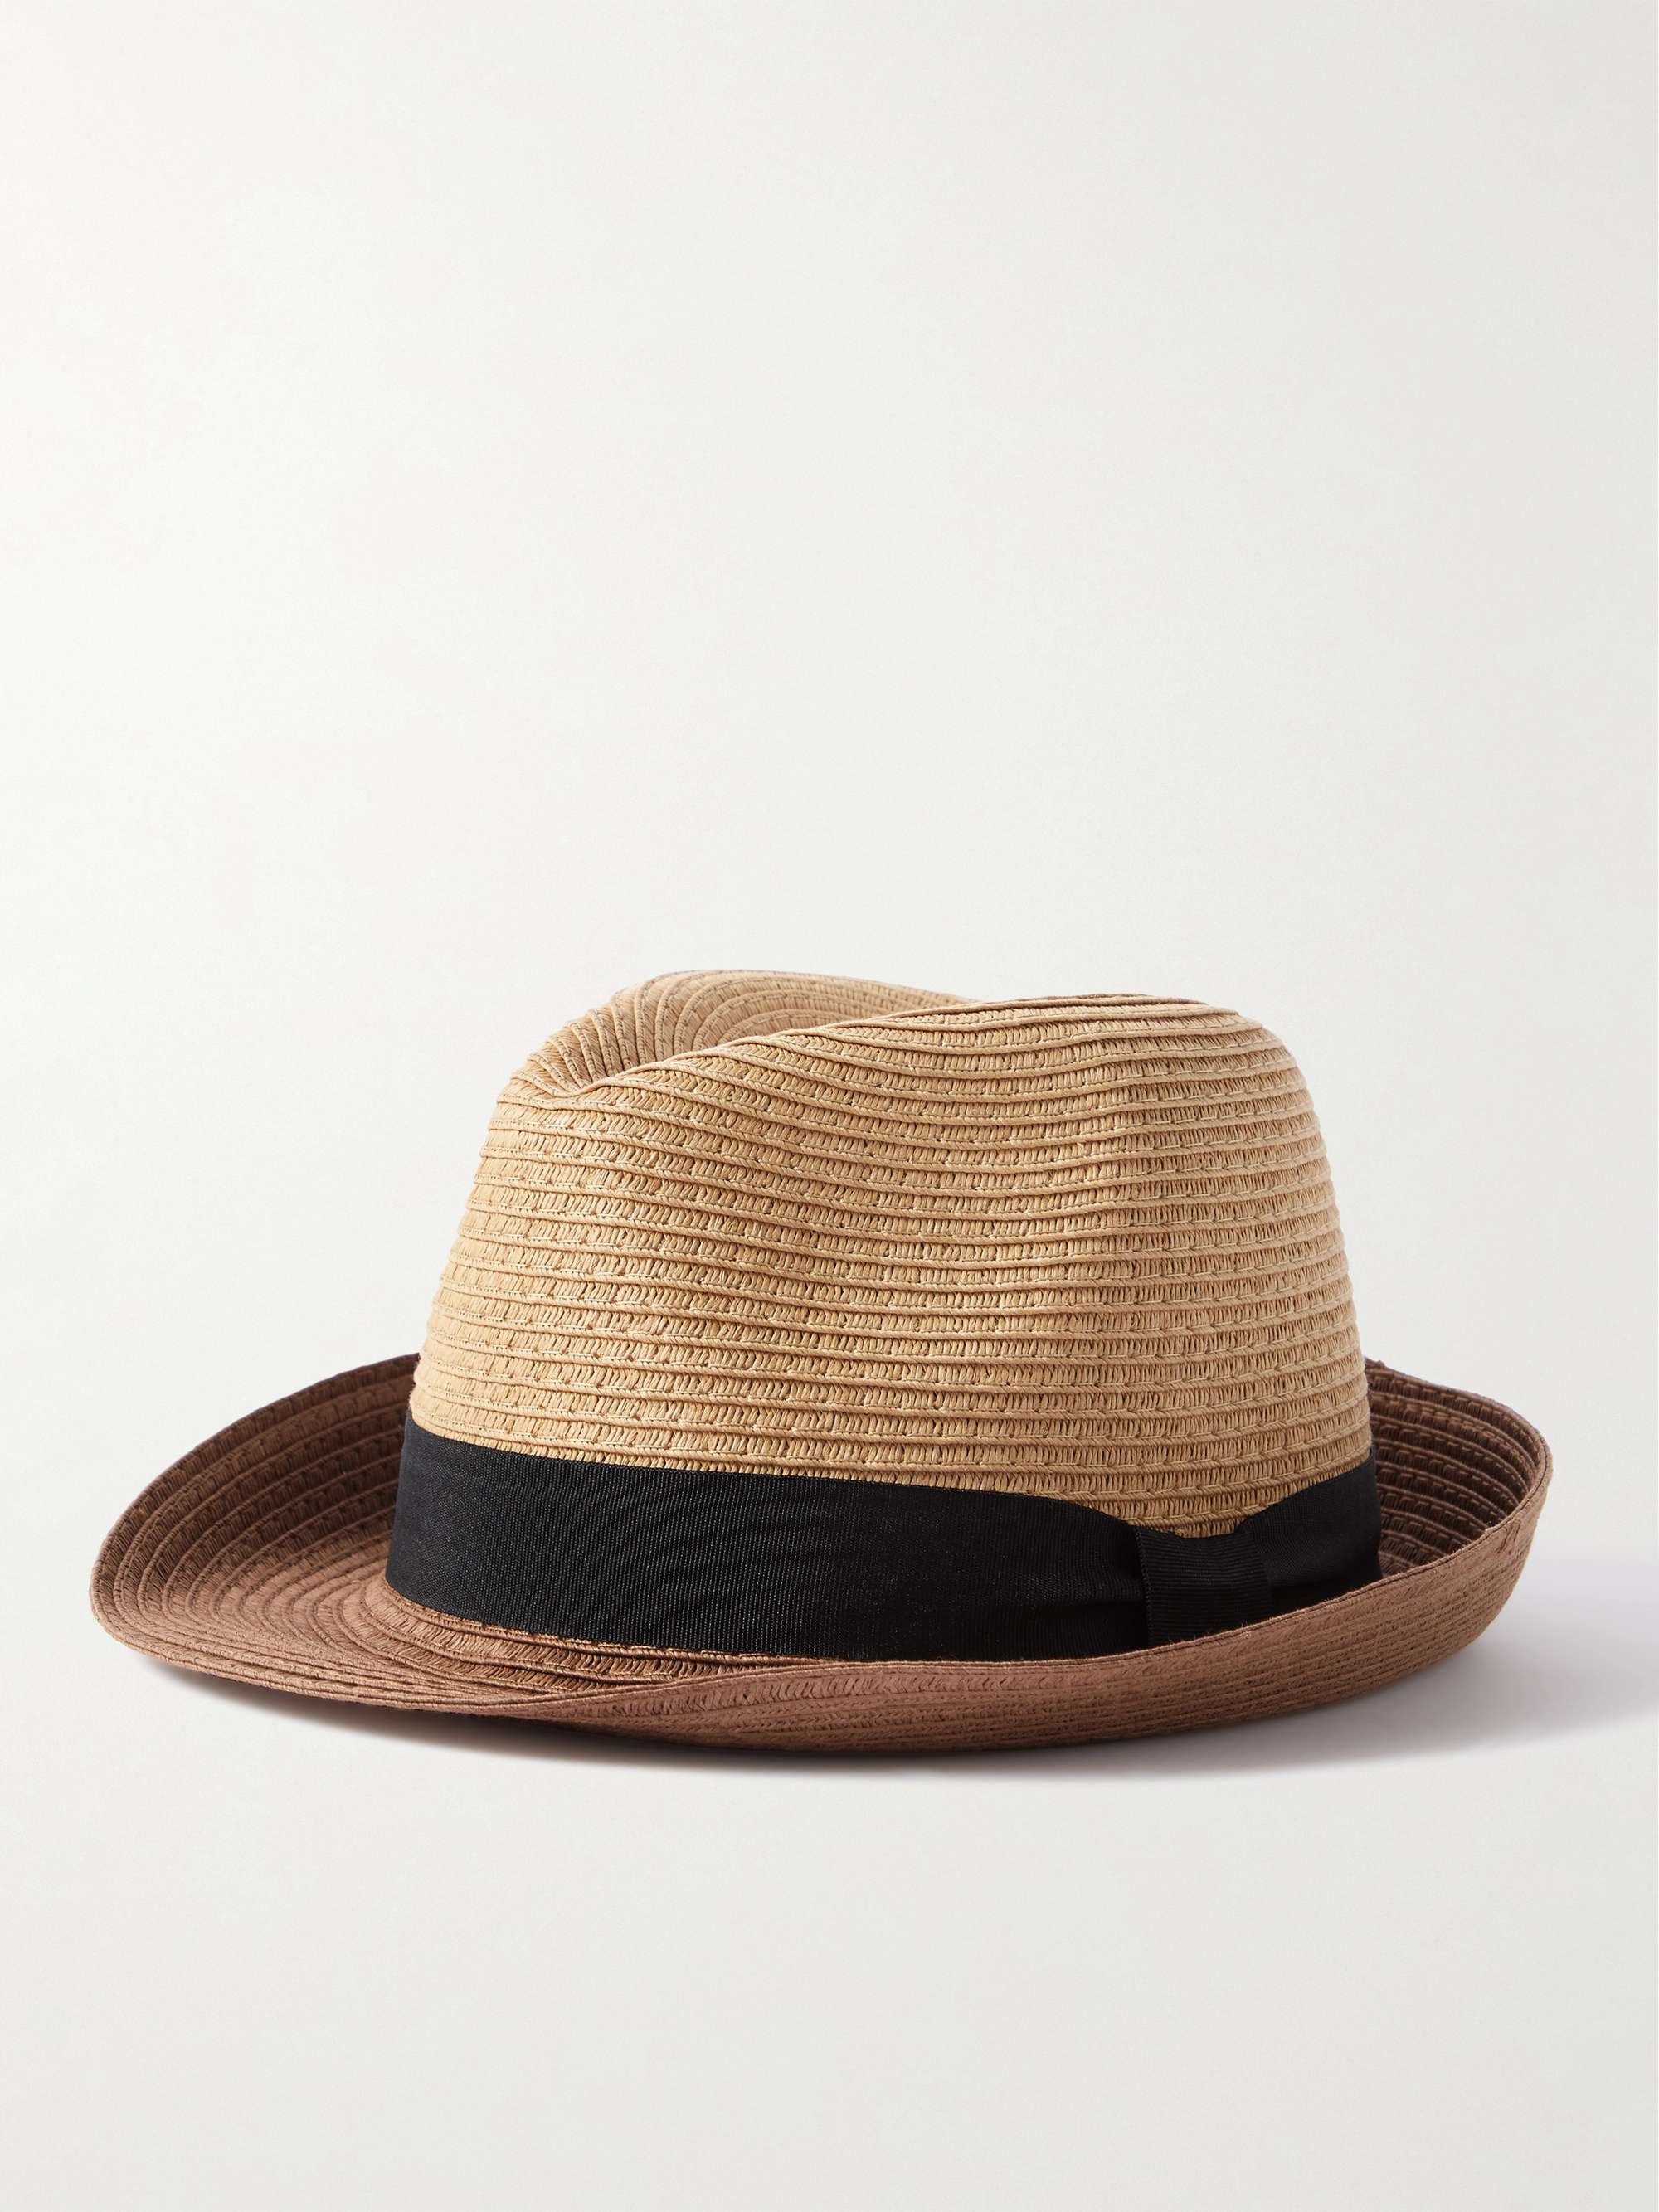 PAUL SMITH Grosgrain-Trimmed Straw Trilby Hat